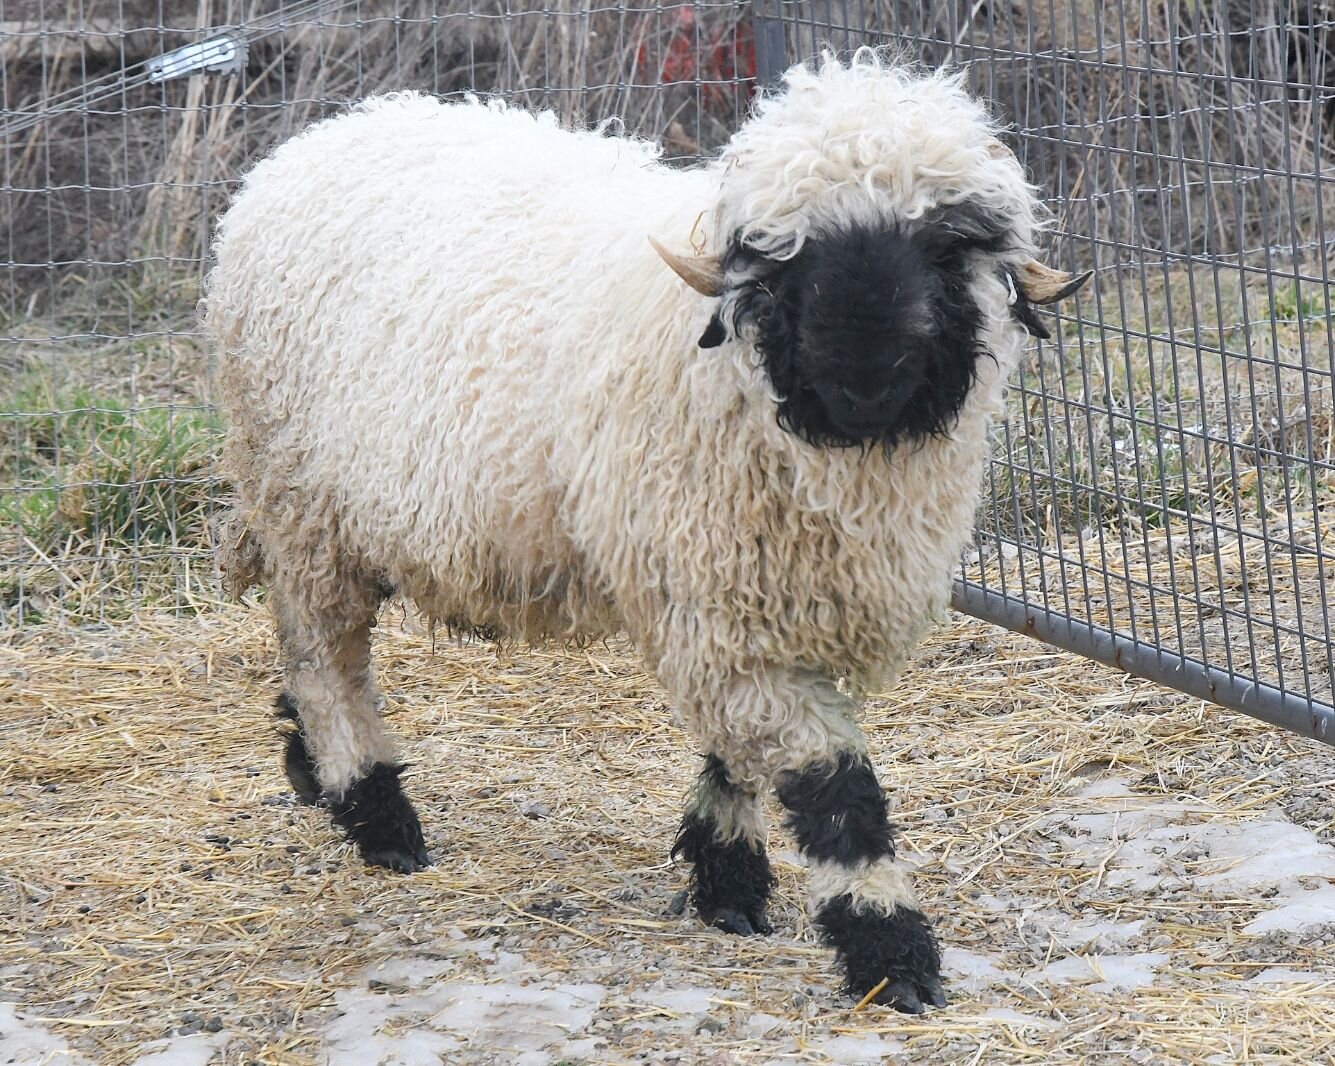 One of the femaie Valais Blacknose sheep